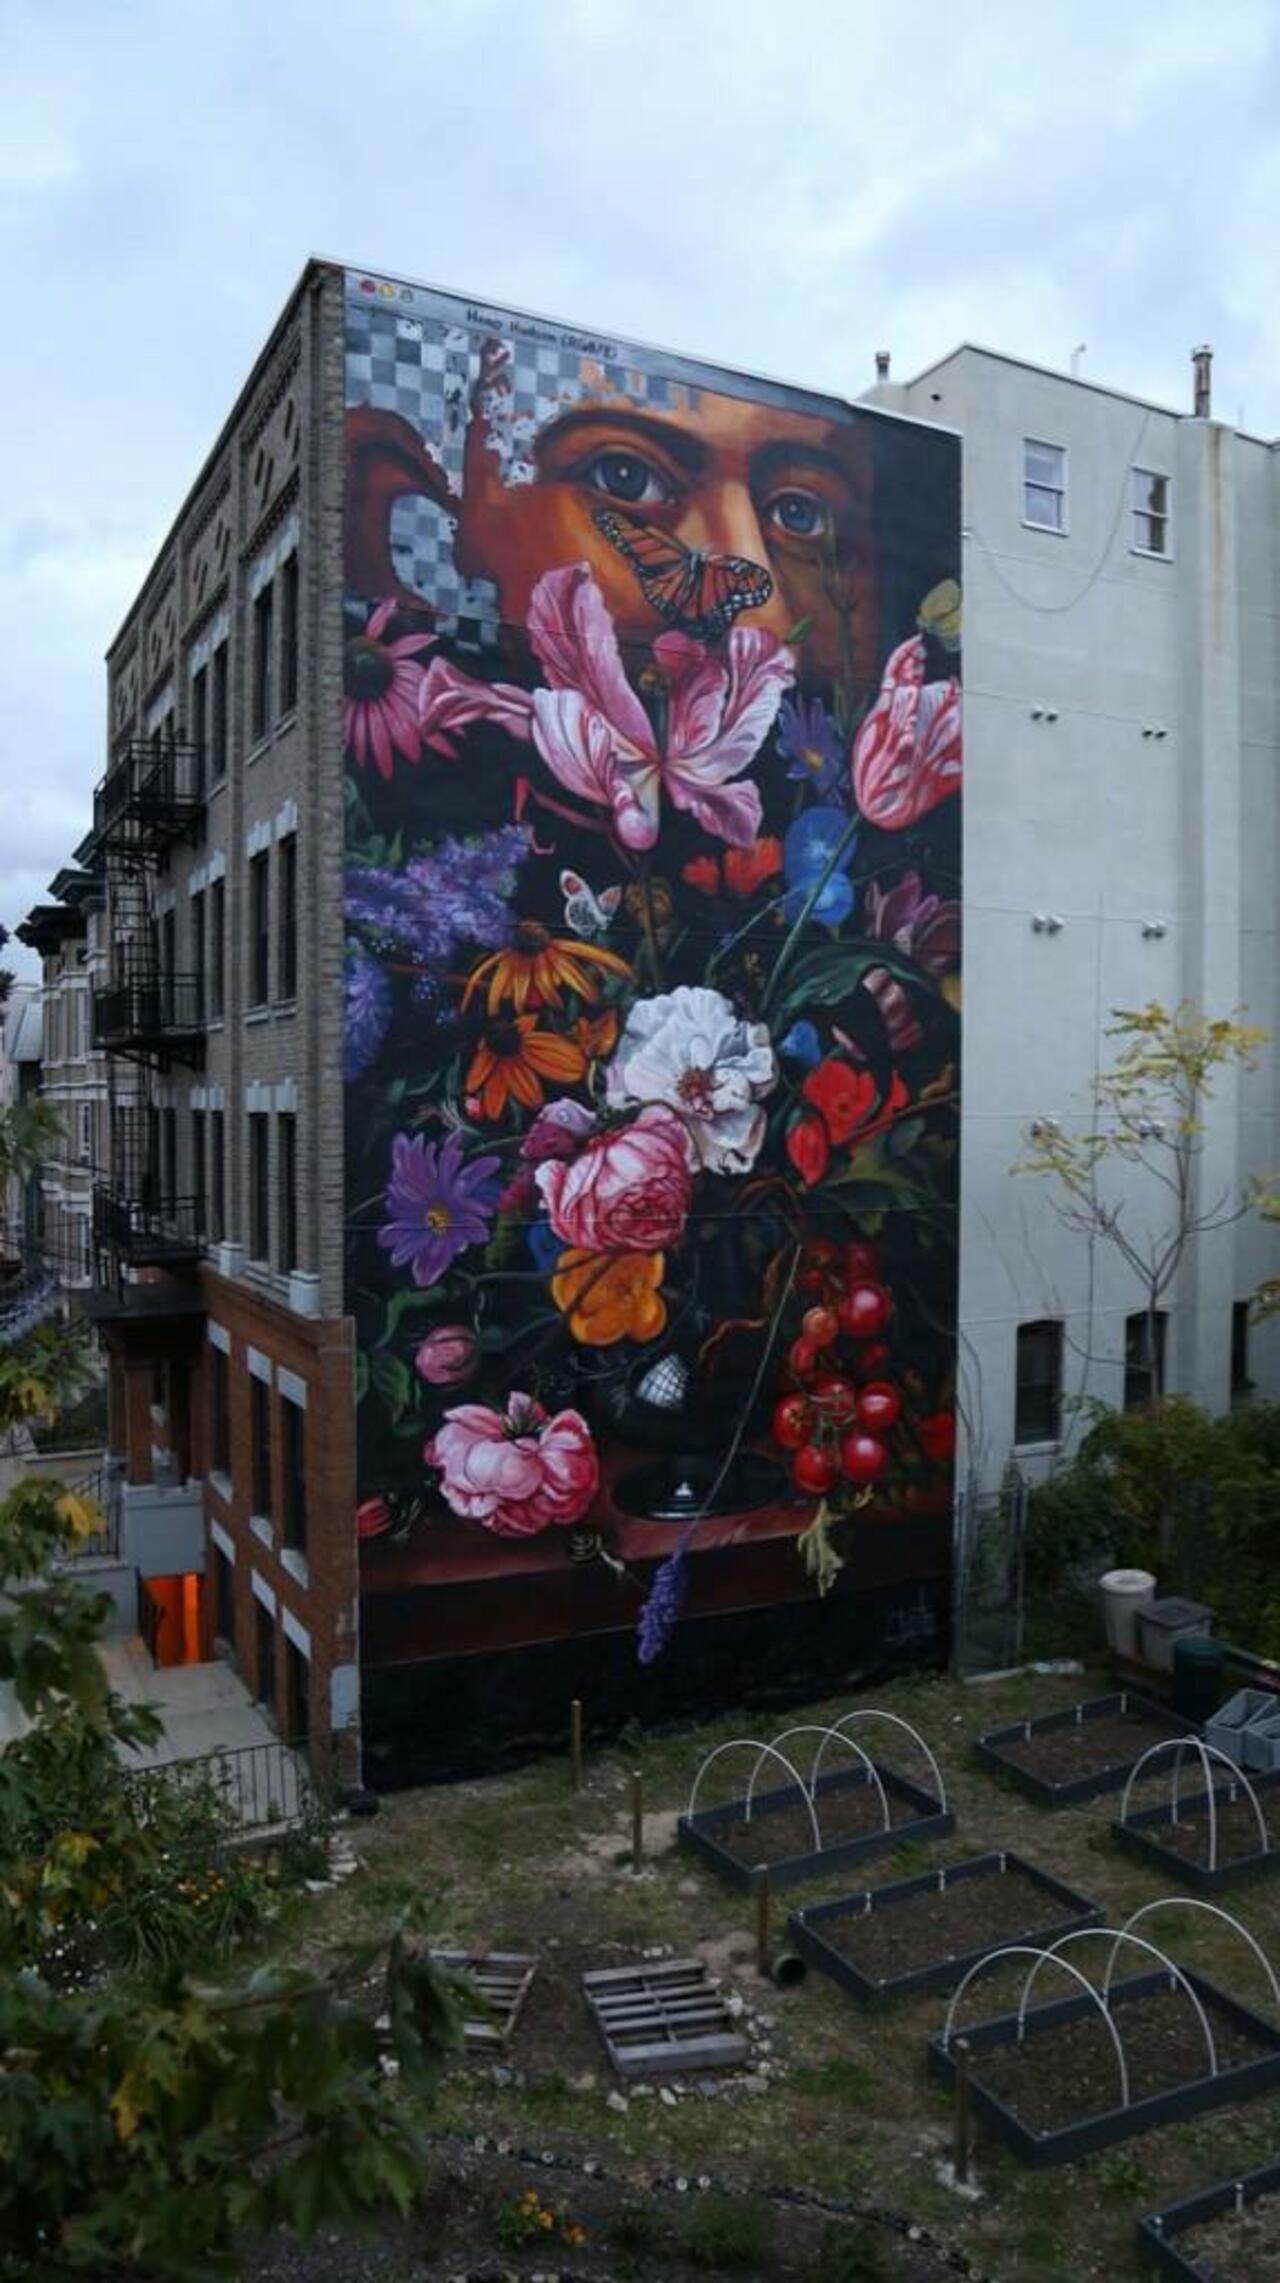 Beautiful Street Art mural by the artist Gaia in Jersey City, NJ 

#art #graffiti #arte #streetart http://t.co/3jpYqyrJIO